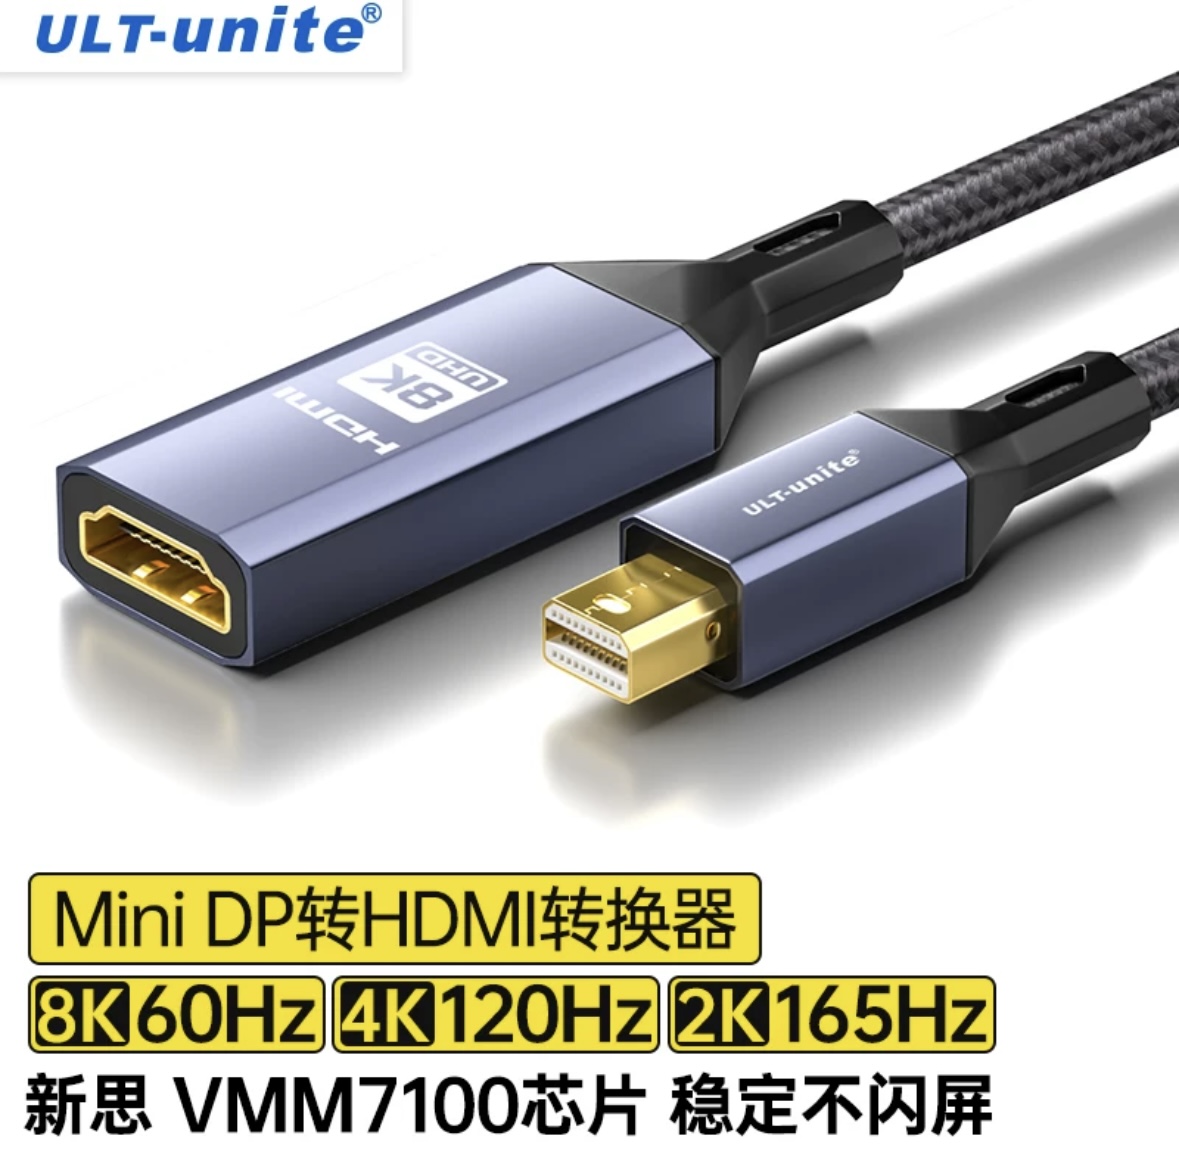 Buy Anker USB C to HDMI Adapter (8K@60Hz or 4K@144Hz), 518 USB-C